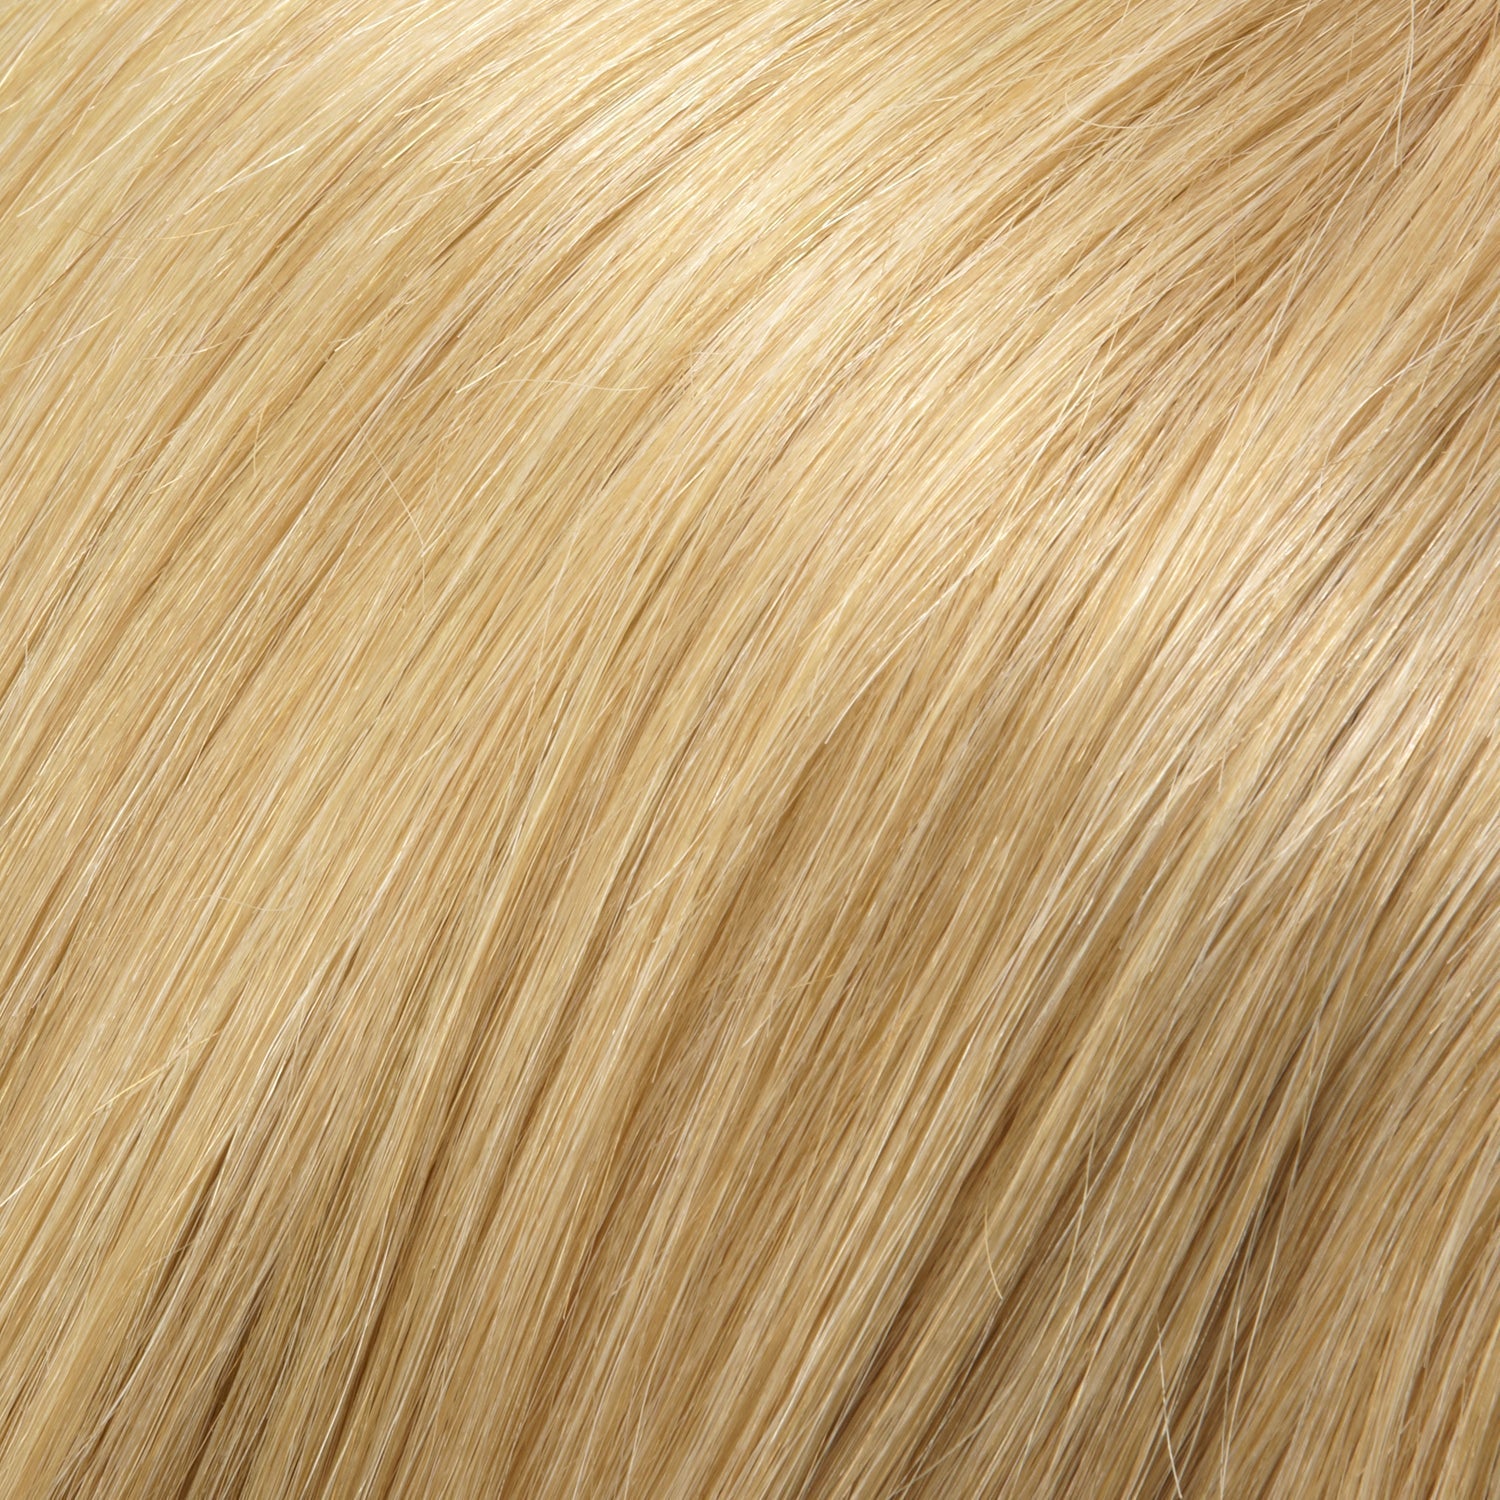 Layla wig - Jon Renau Reimagined Human Hair Collection *NEW*